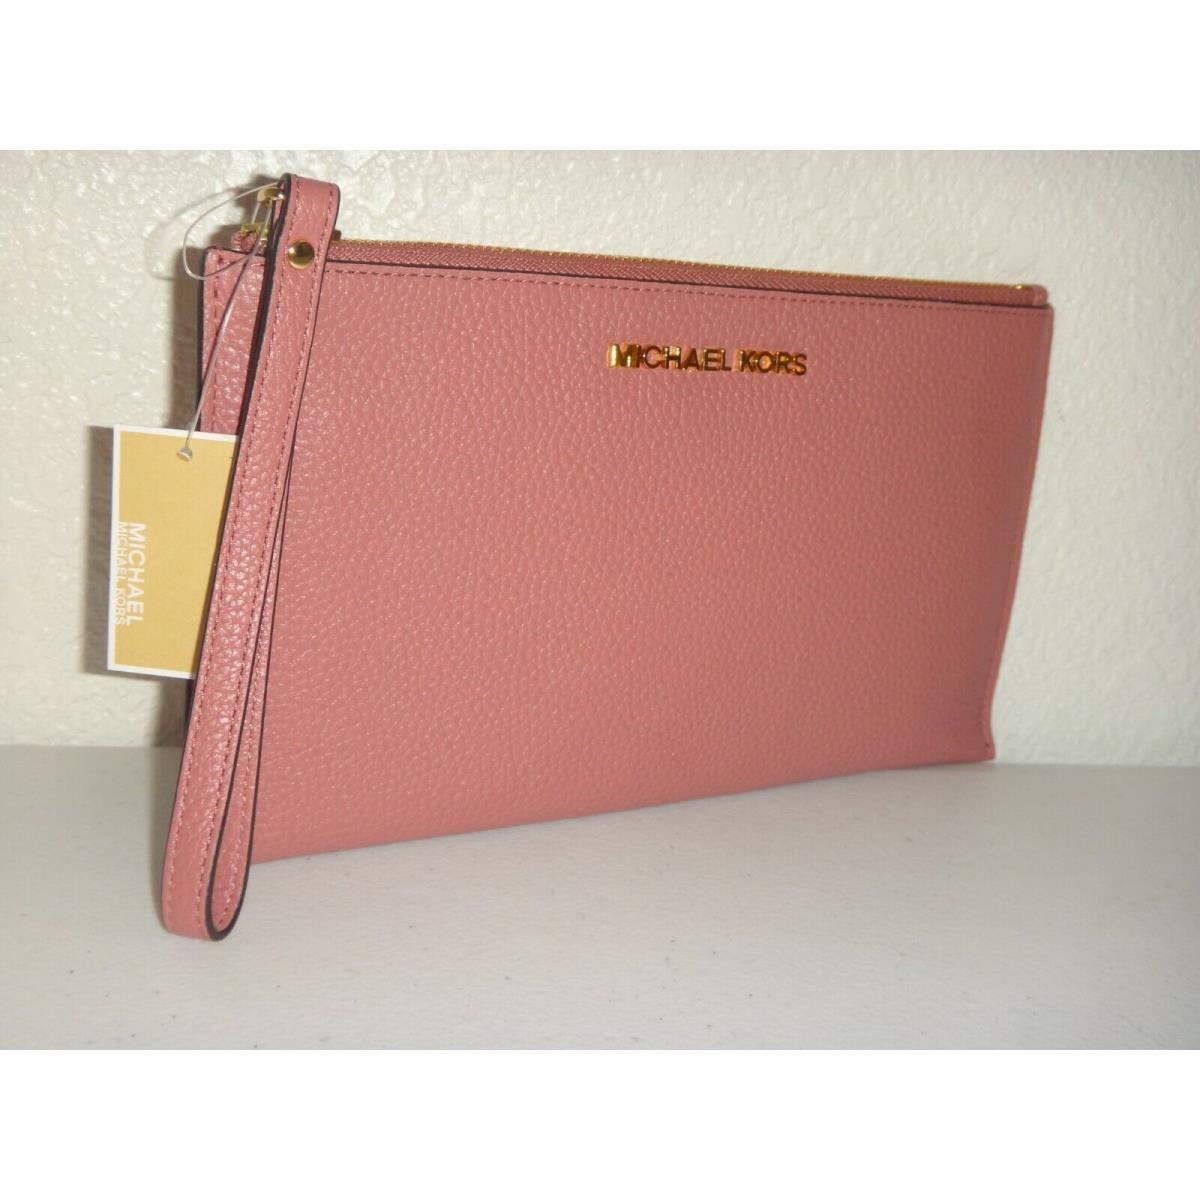 Michael Kors Women`s MK Jet Set LG Zip Clutch Wrist-let Wallet Rose Pink Leather